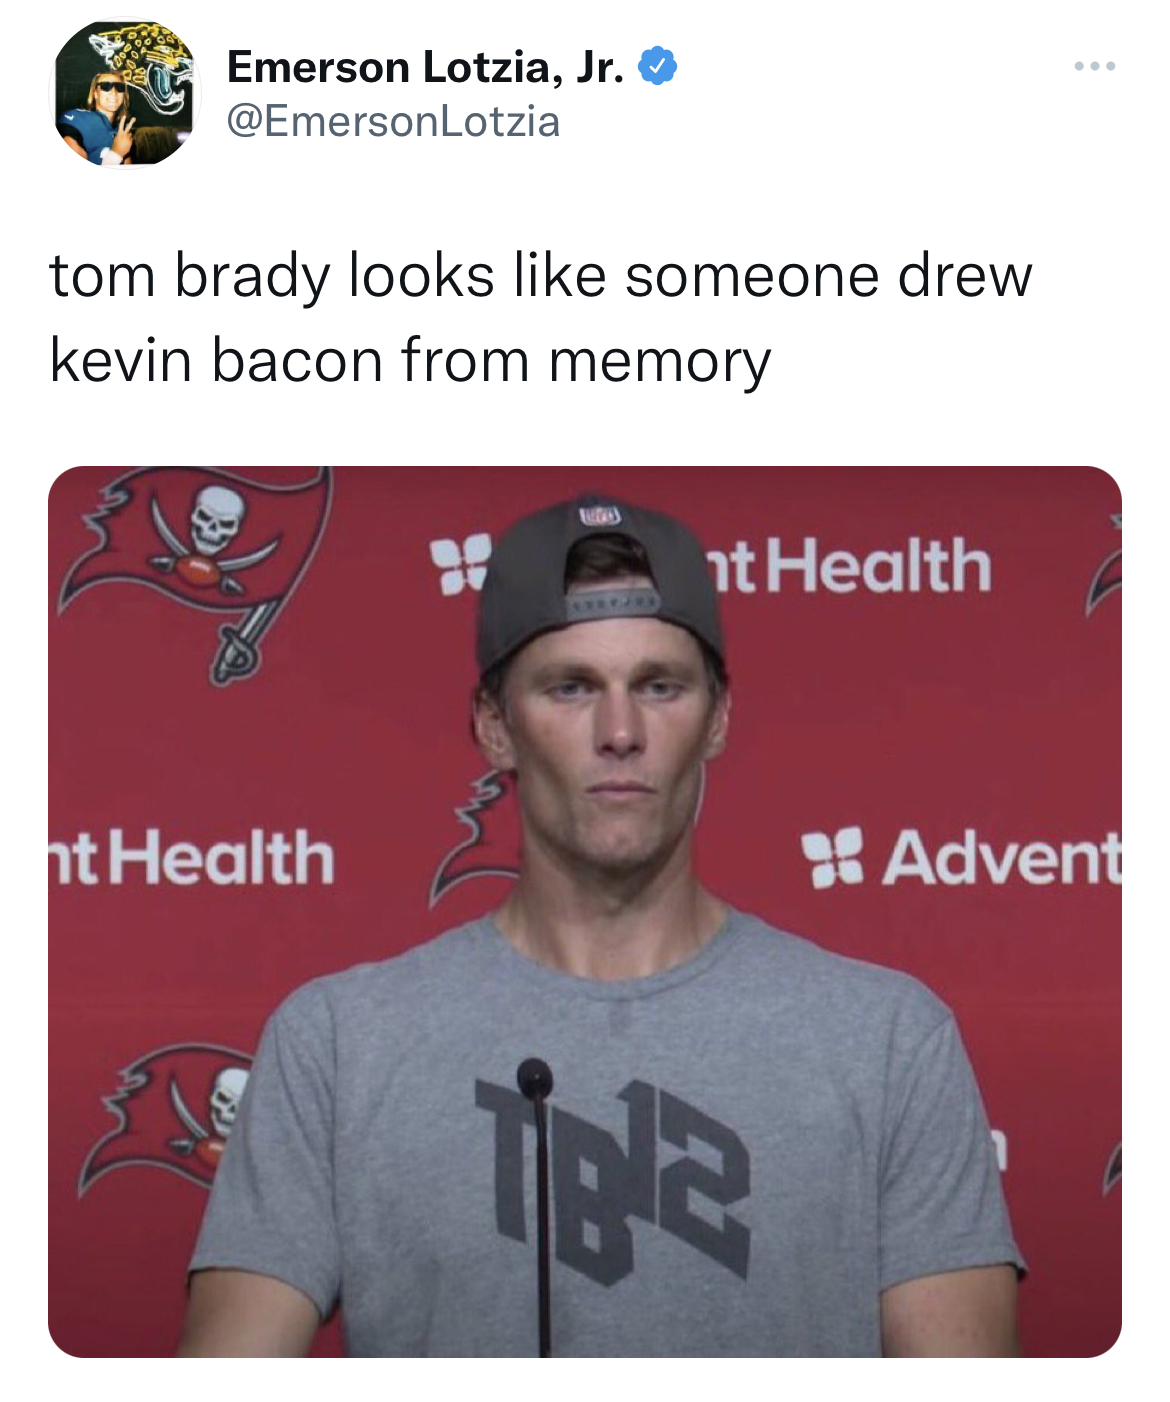 funny quick wit tweets - Tom Brady - Emerson Lotzia, Jr. tom brady looks someone drew kevin bacon from memory ht Health nt Health ip2 Advent